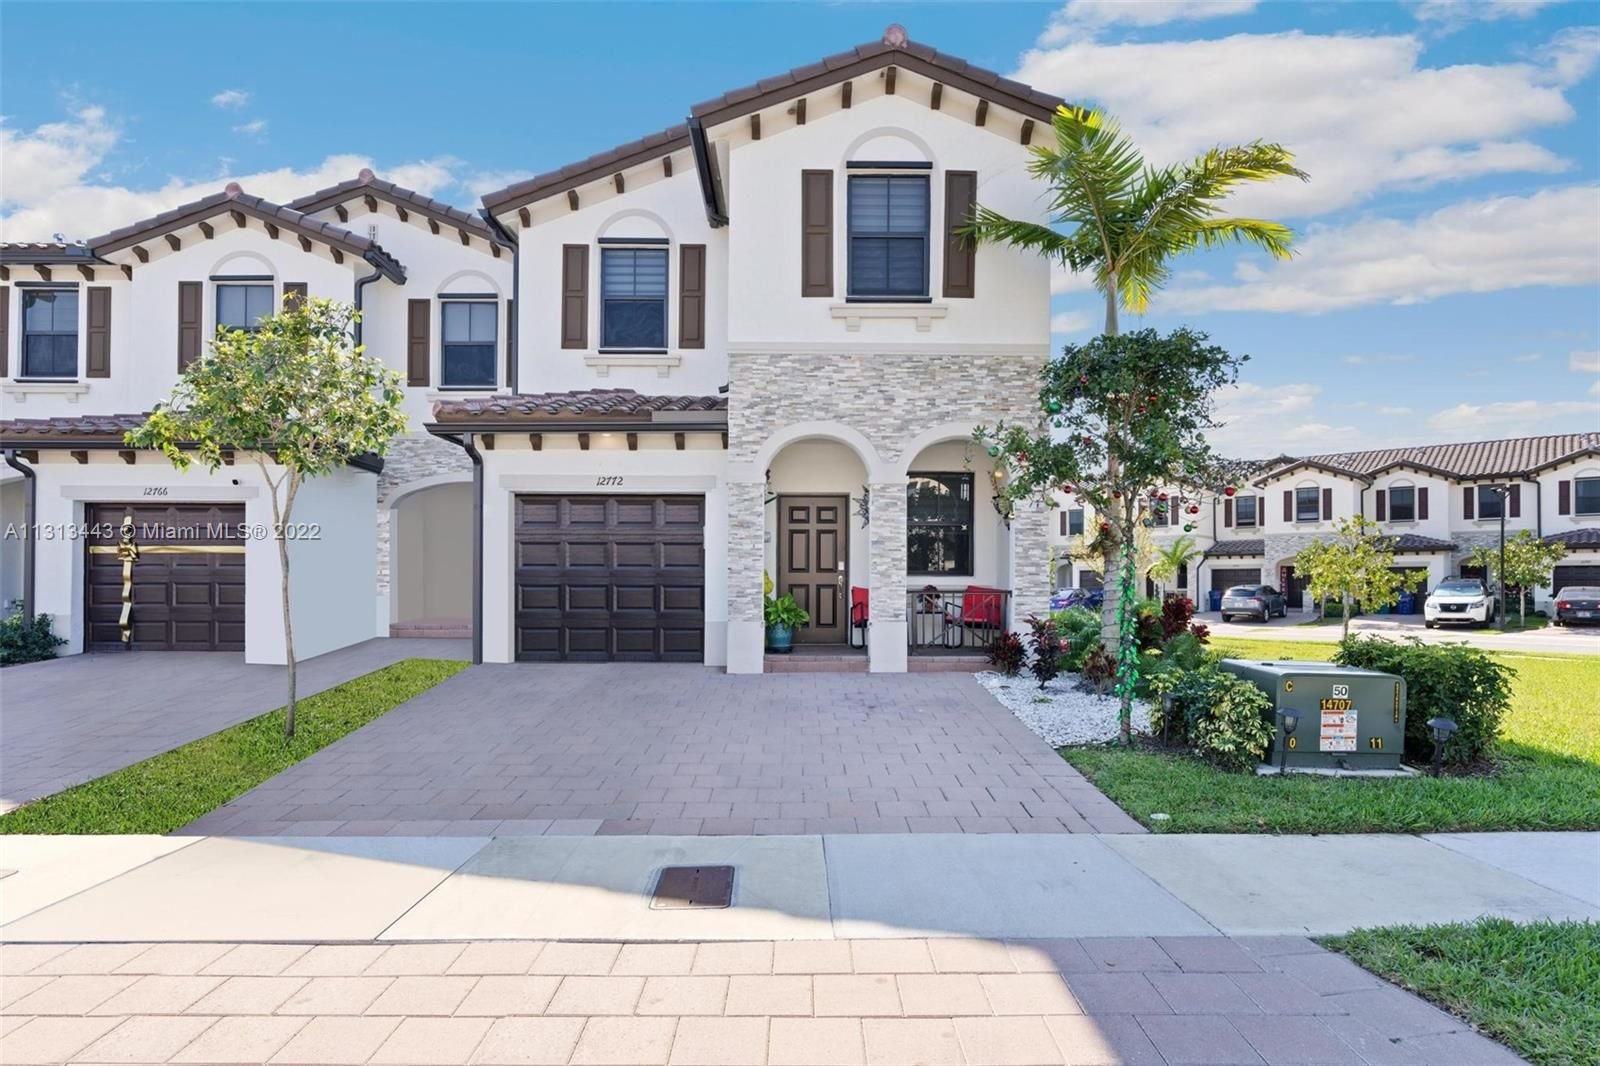 Real estate property located at 12772 229th Ter #0, Miami-Dade County, Miami, FL